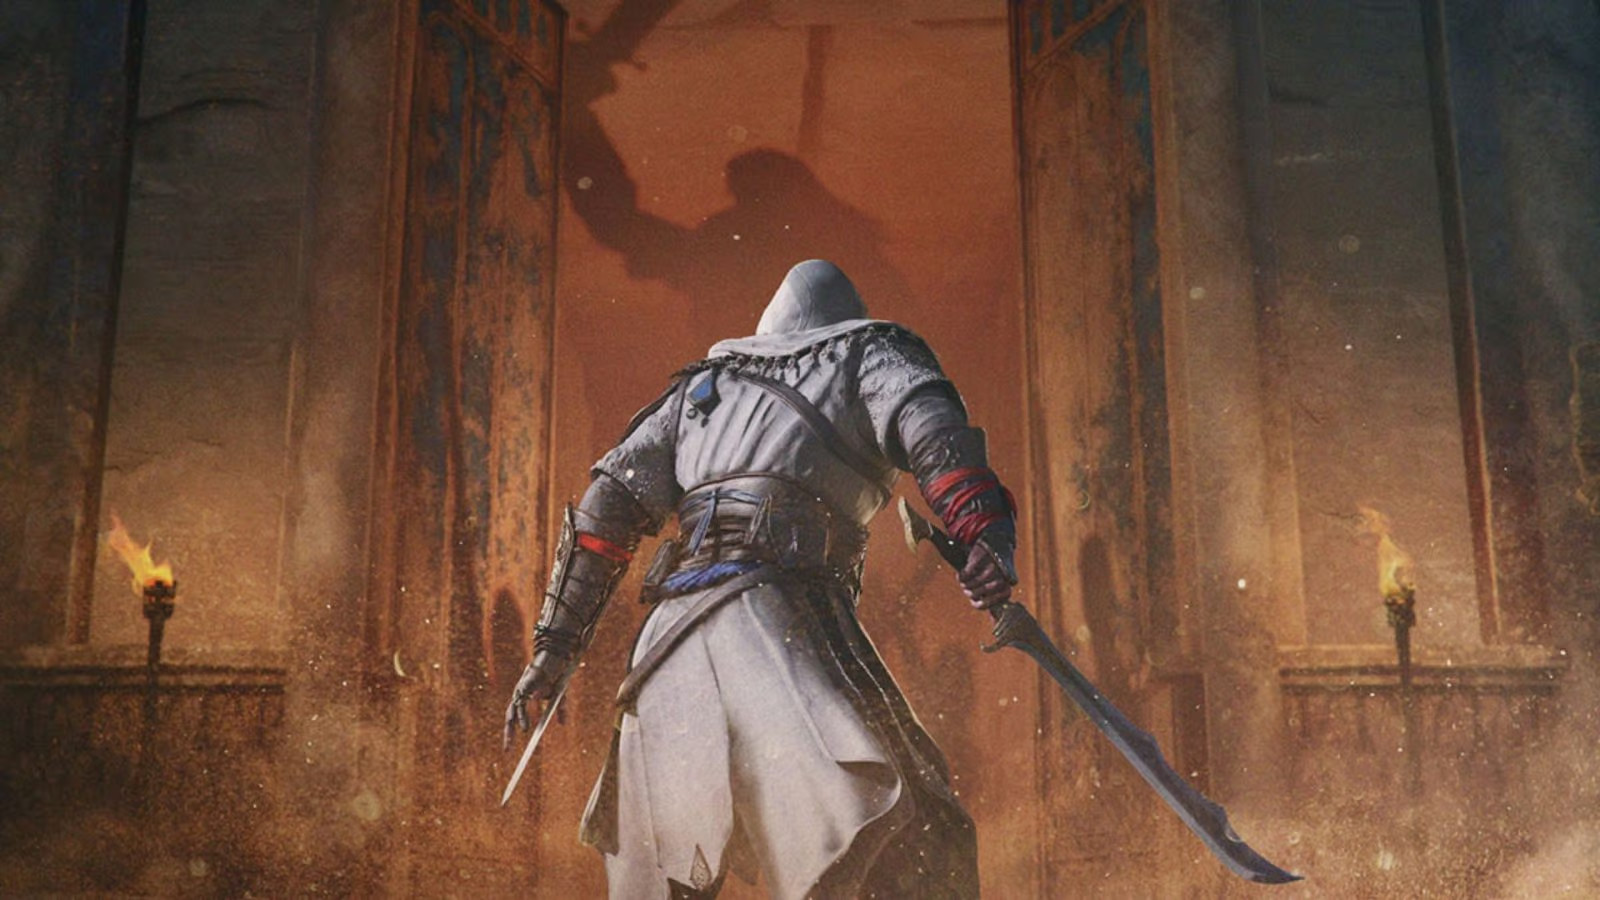 [$ 0.55] Assassin's Creed Mirage - Pre-order Bonus DLC EU Ubisoft Connect CD Key